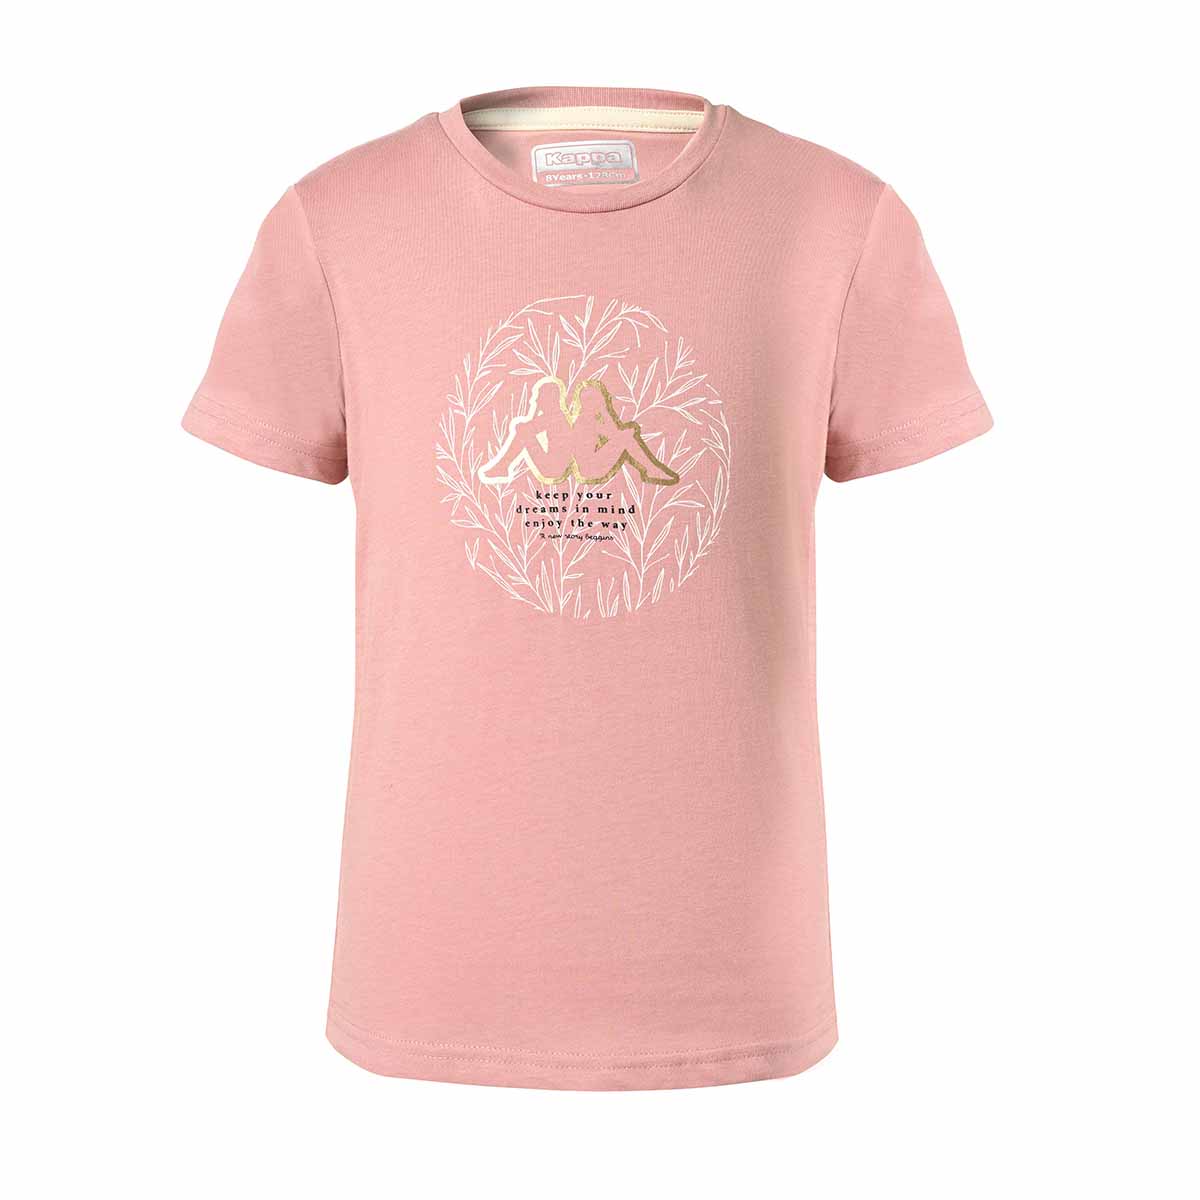 Camiseta Kappa Bts Bessya - rosa - 